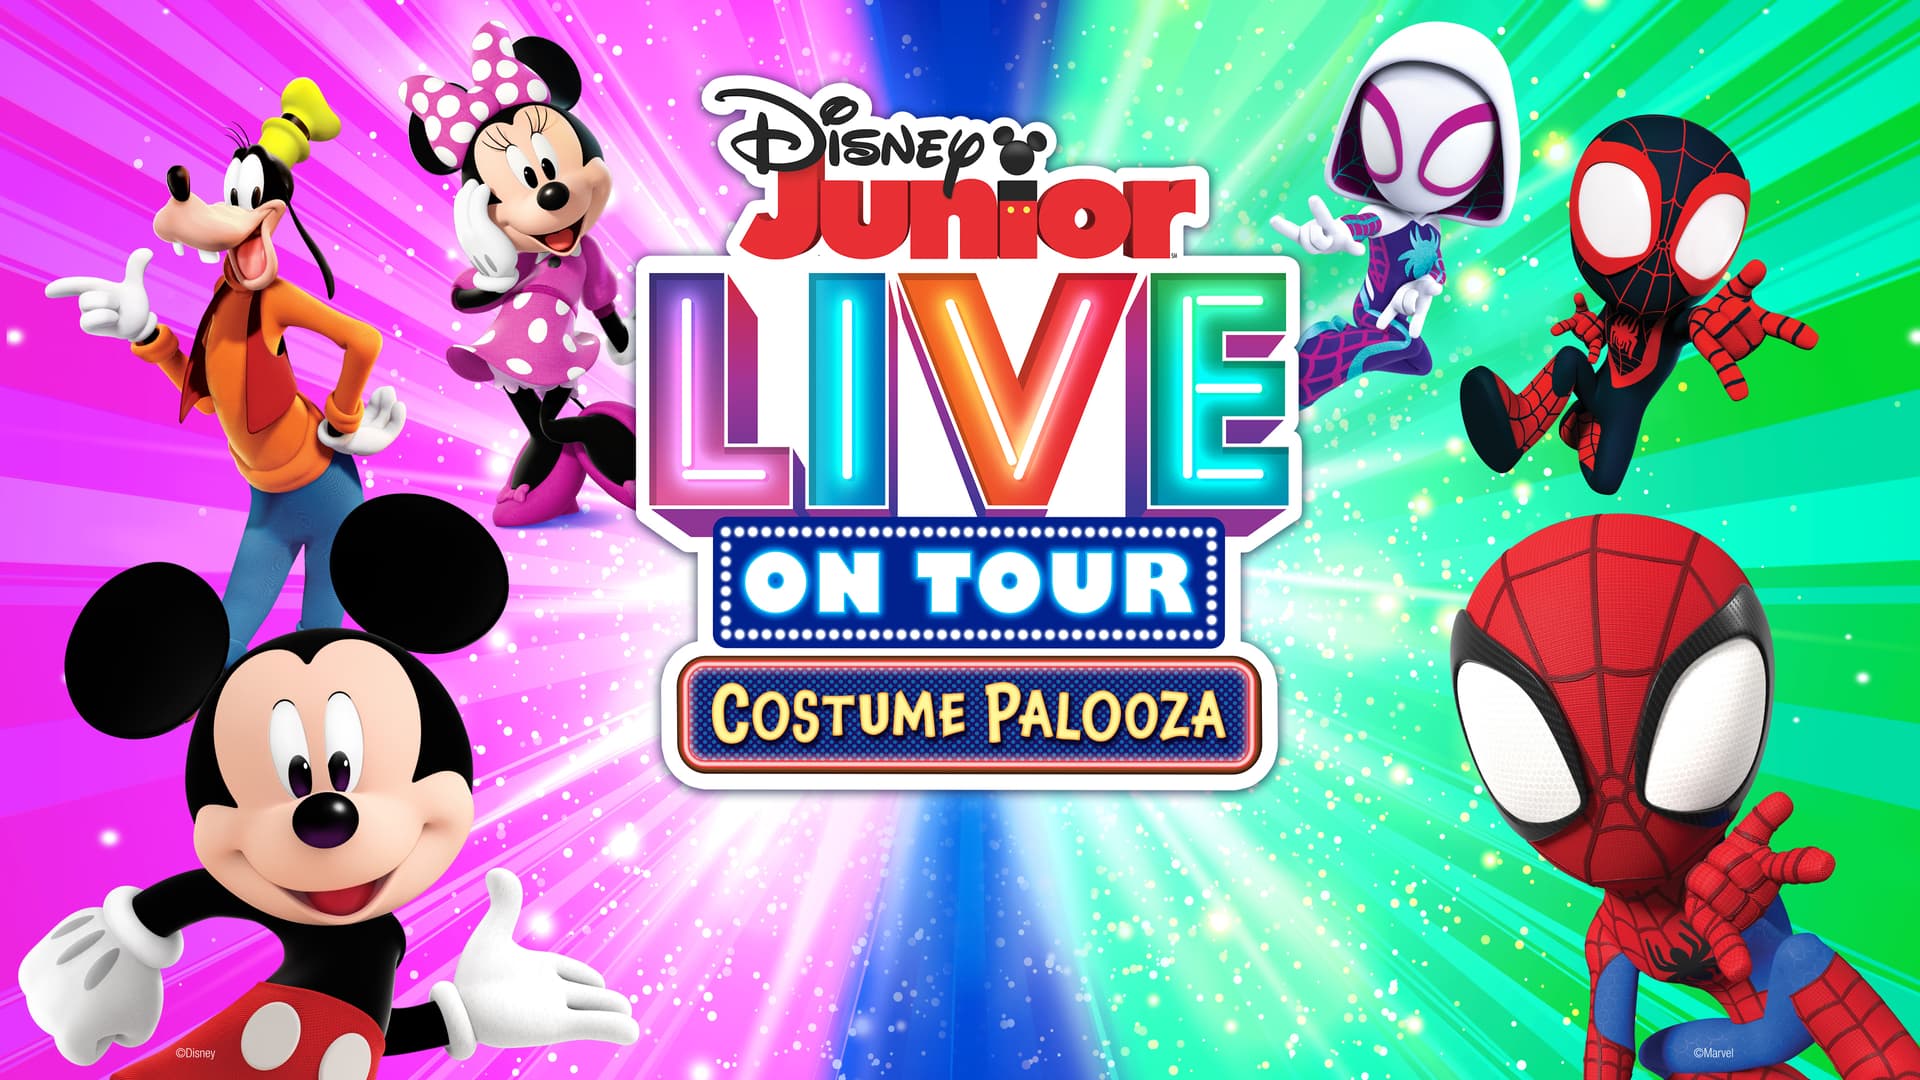 “Disney Junior Live On Tour: Costume Palooza”